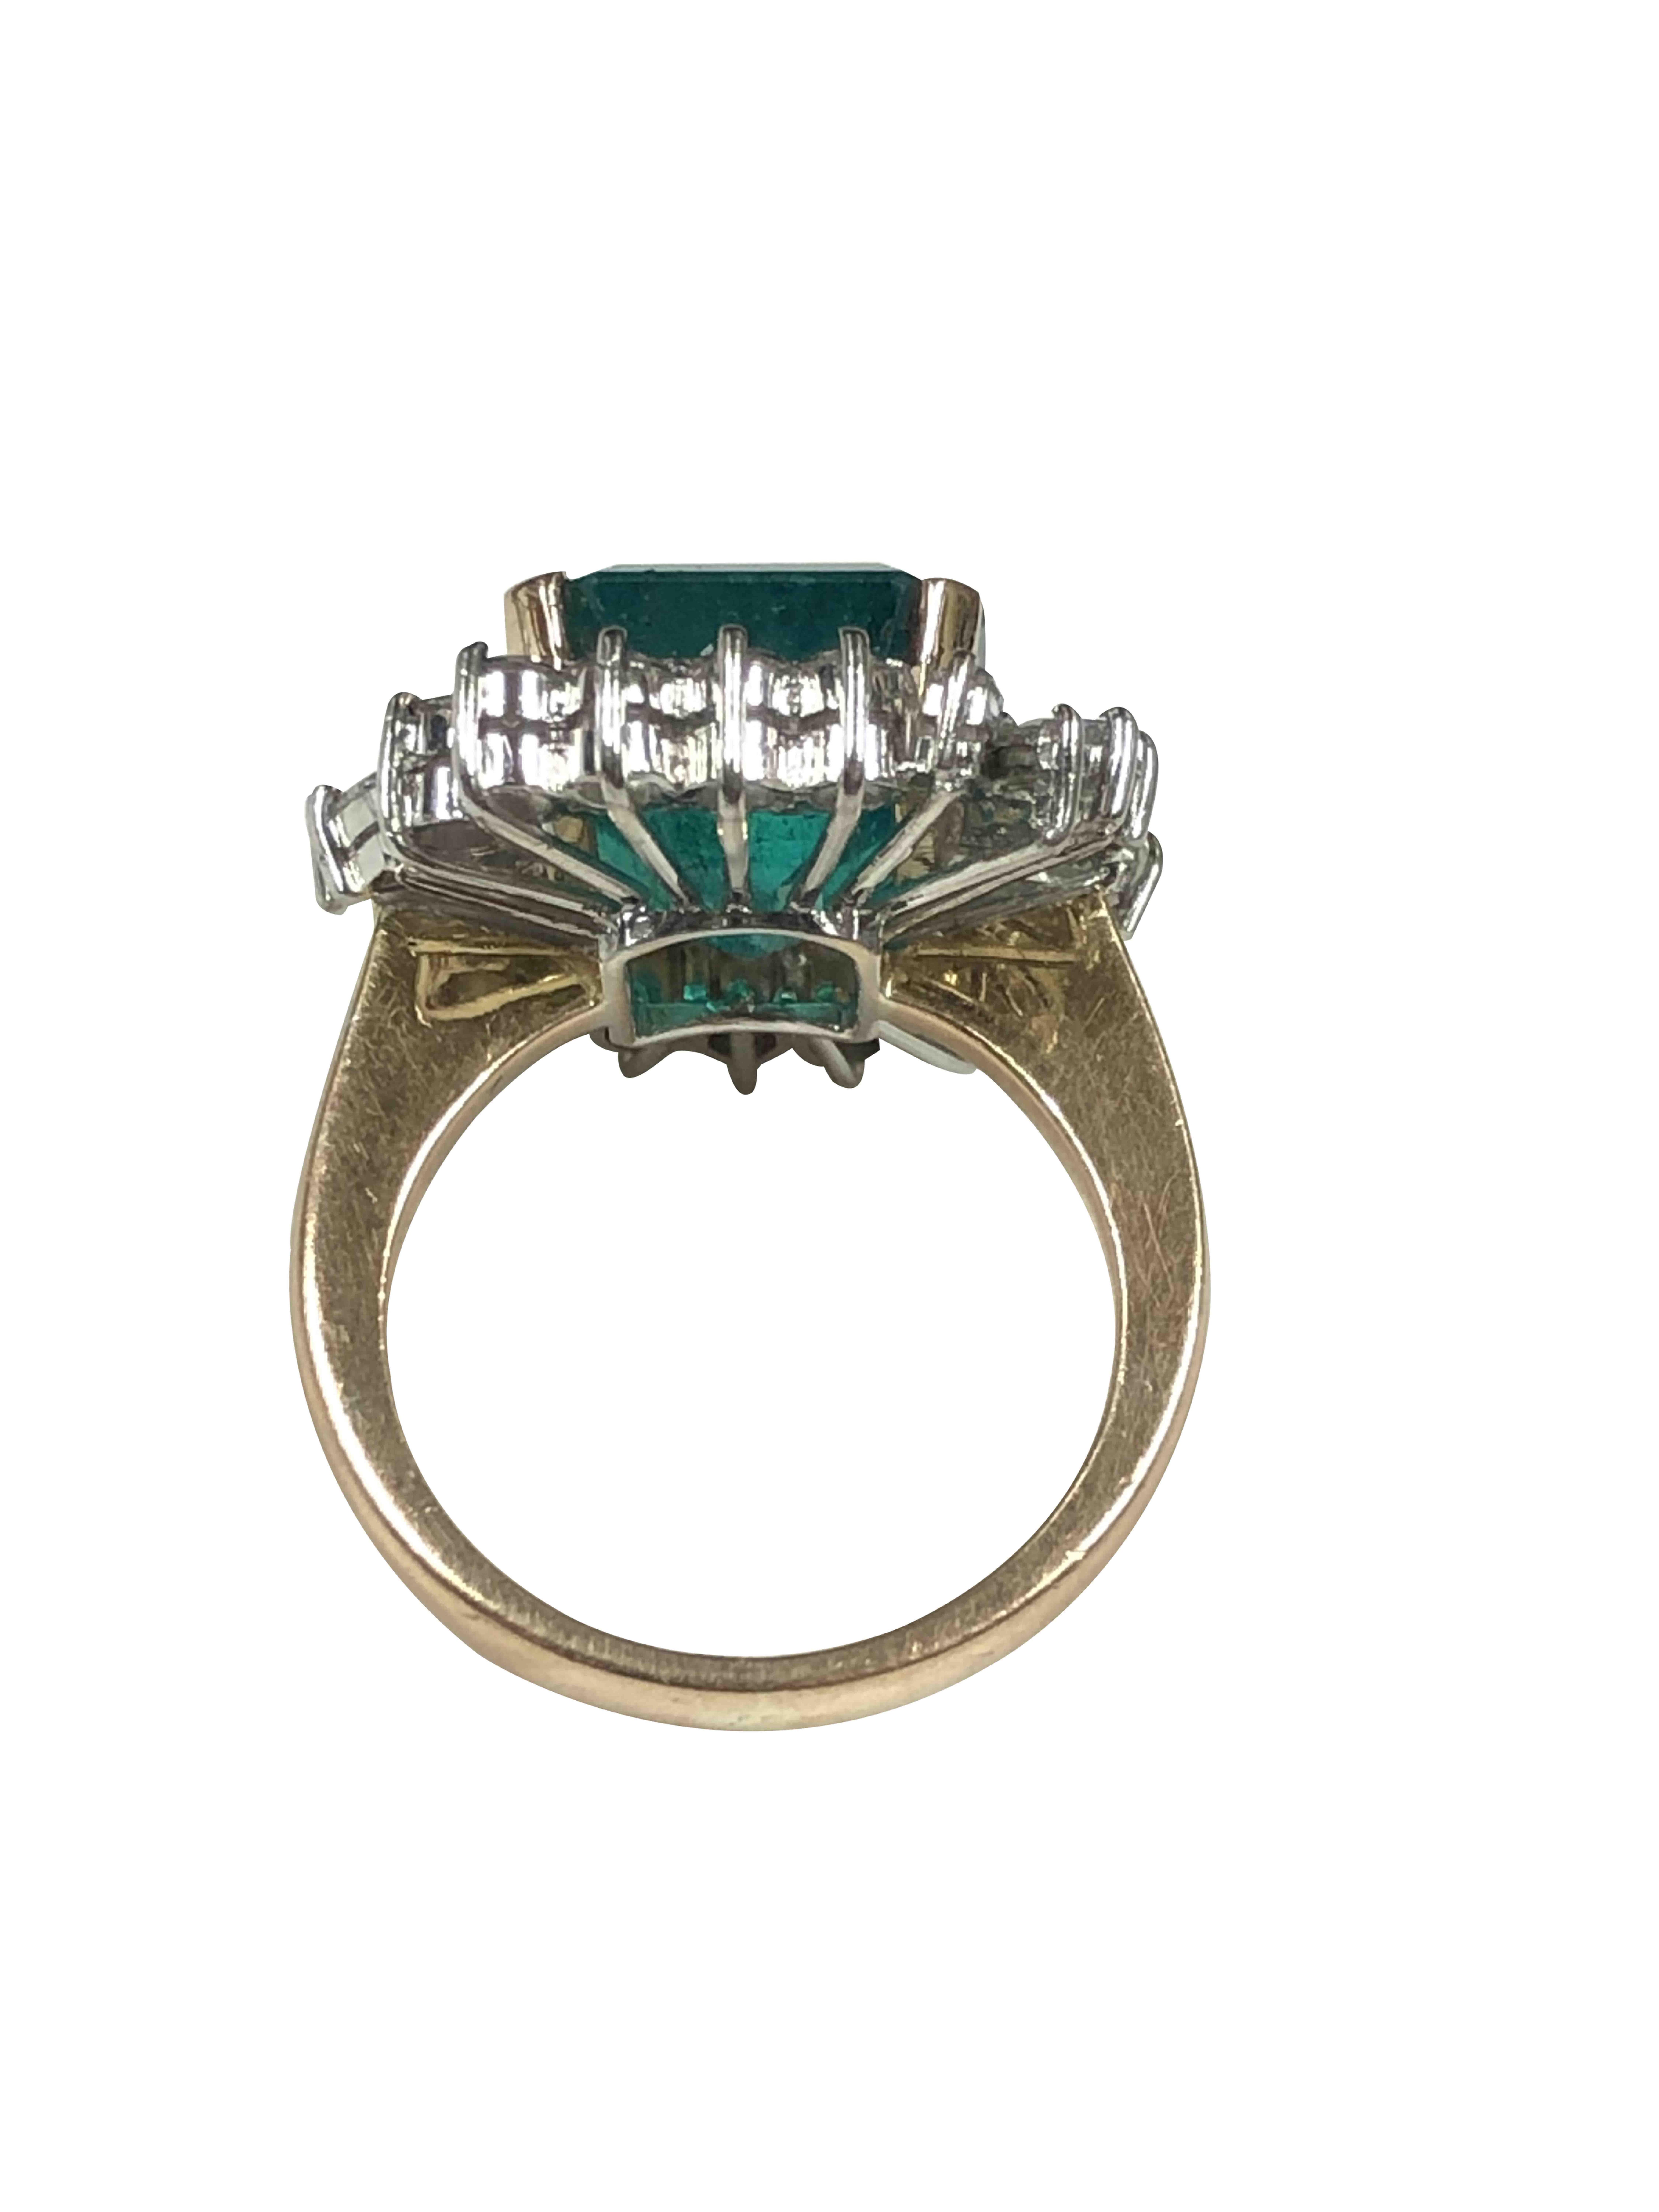 Emerald Cut 9 Carat Fine Columbian Emerald Diamond Platinum and Gold Ring